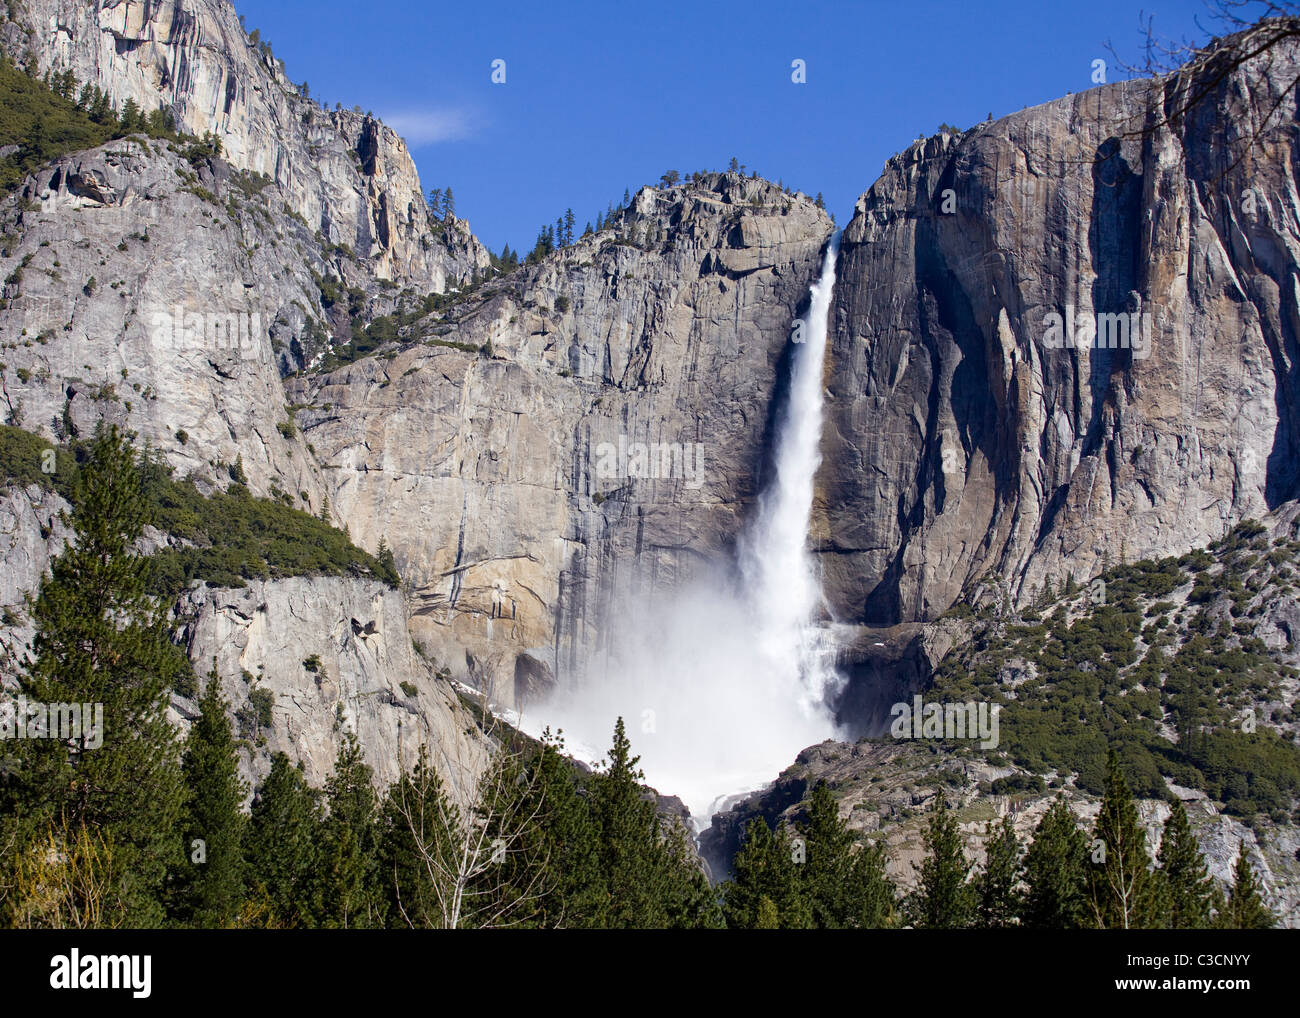 Yosemite falls under blue sky - Yosemite Valley, California, USA Stock Photo